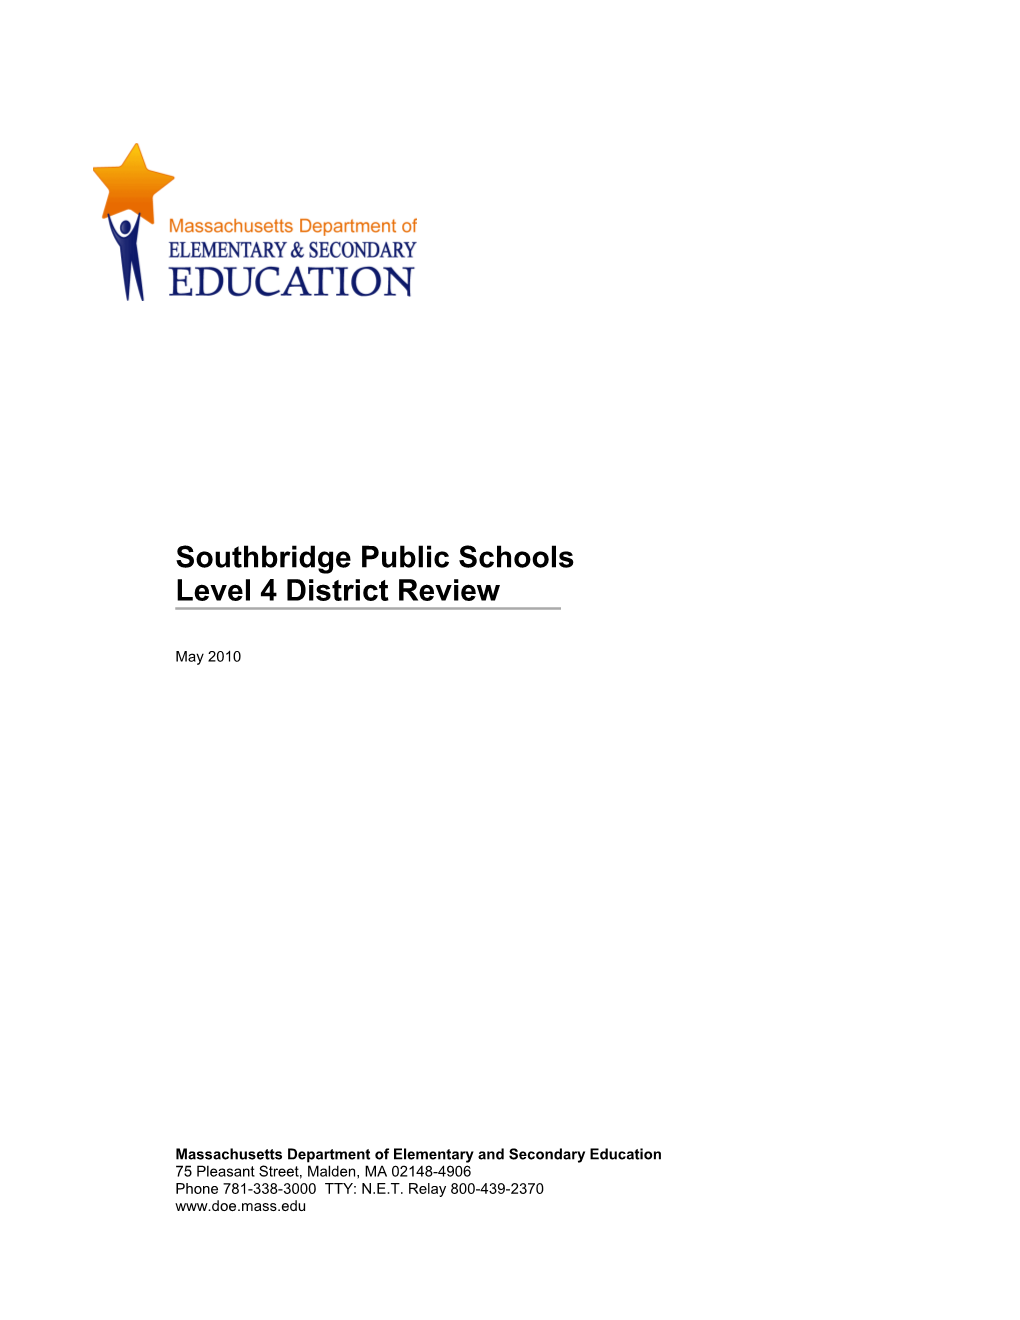 Southbridge Public Schools, Level 4 Review Report May 2010